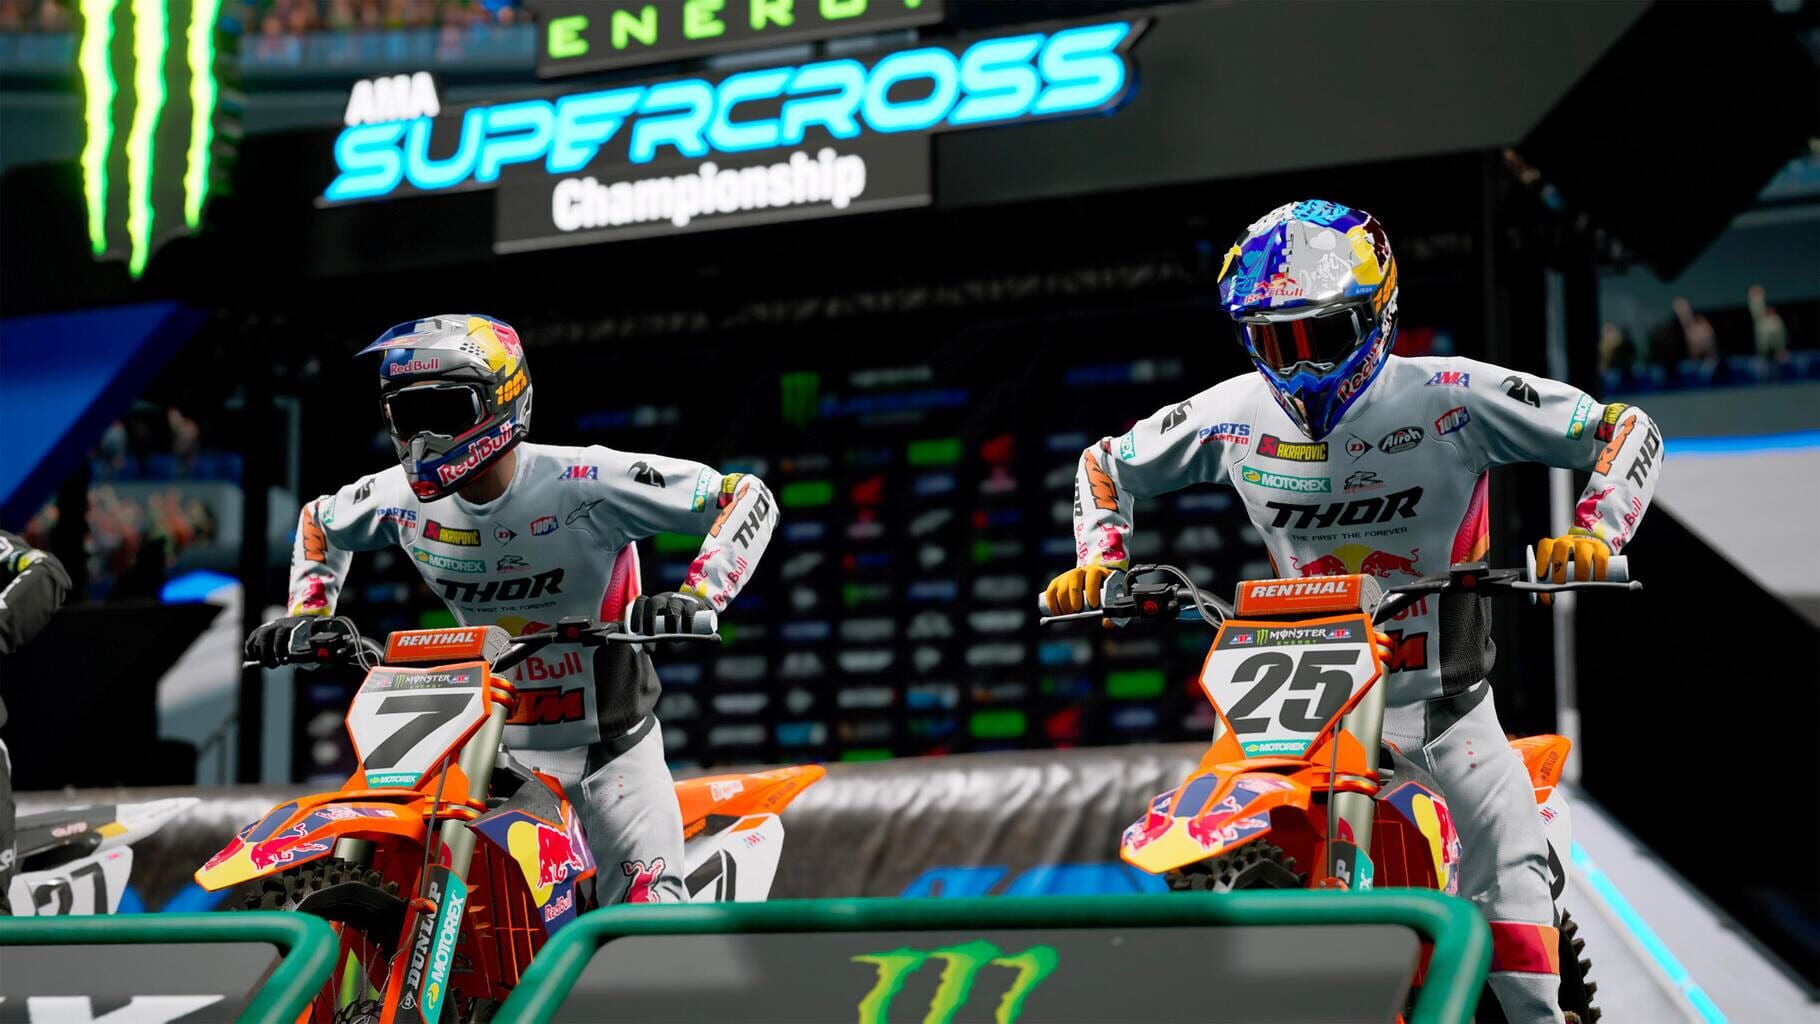 Monster Energy Supercross - The Official Videogame 6 screenshots